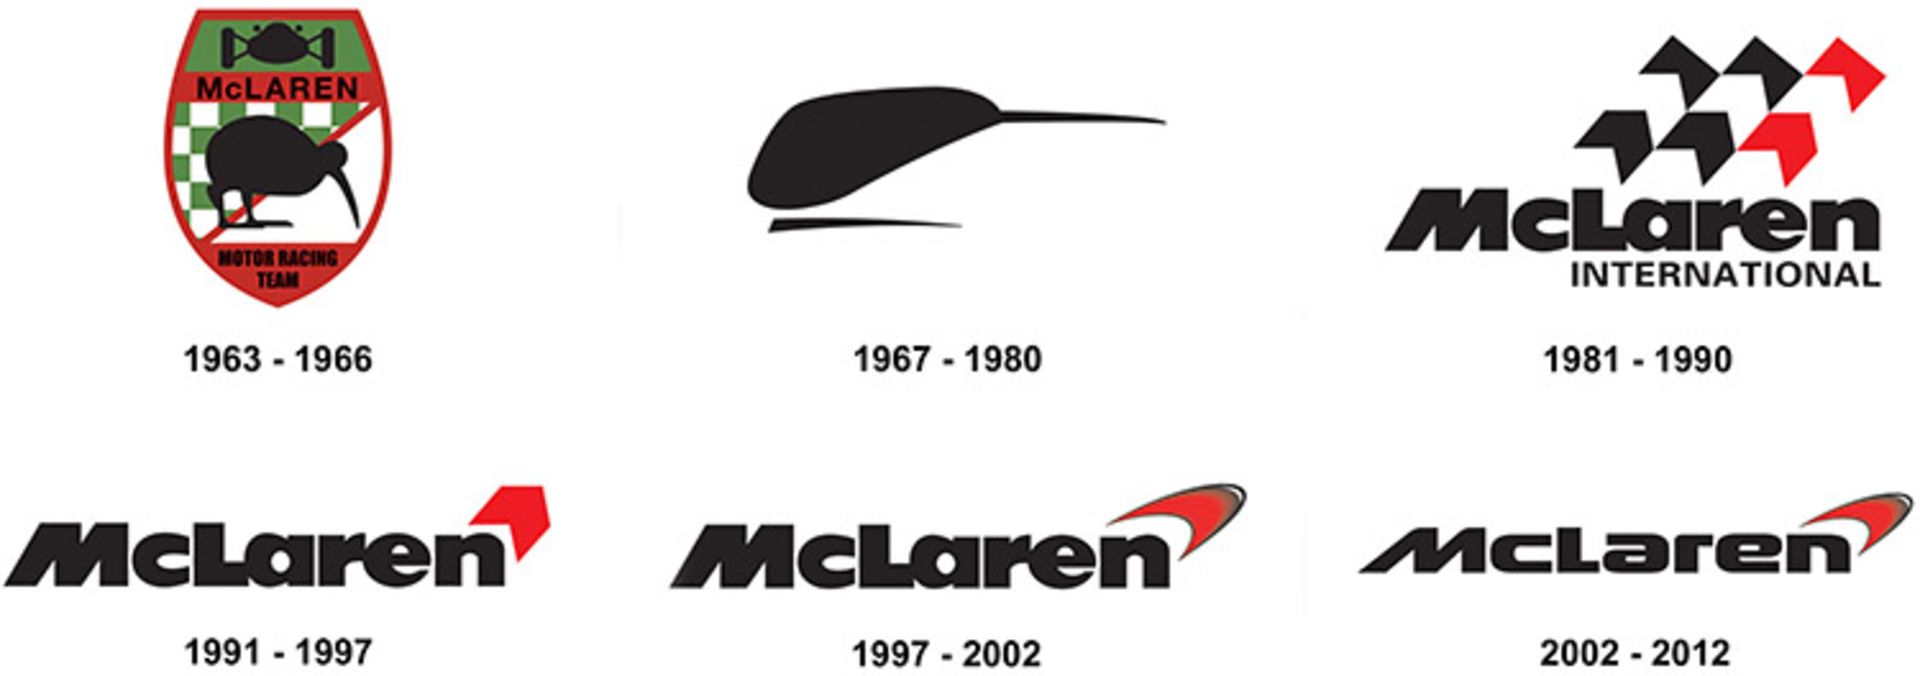 mclaren logo history 